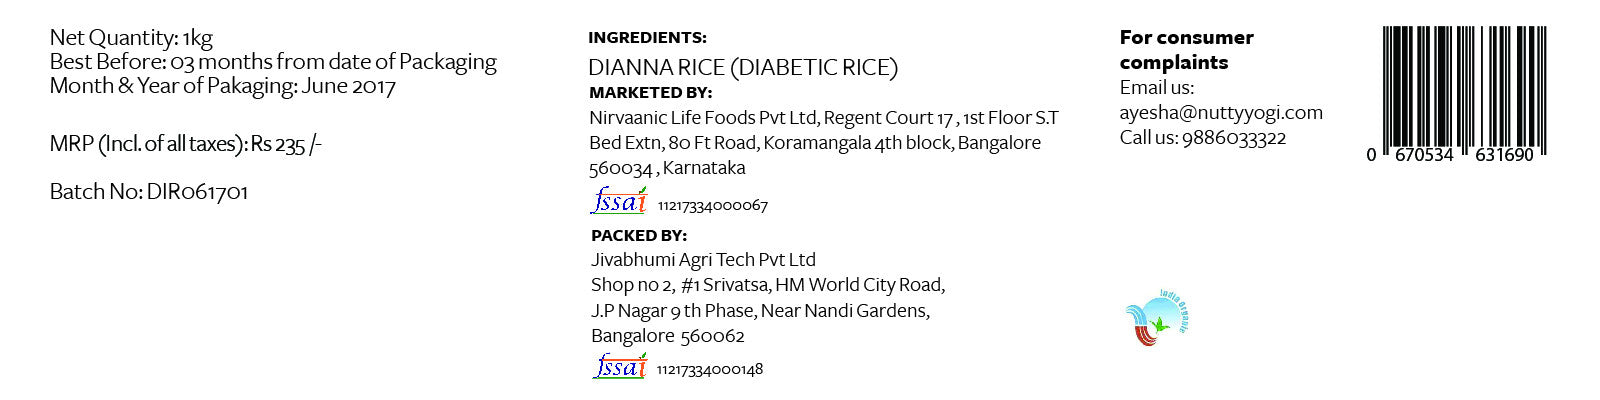 Organic Dianna Rice.